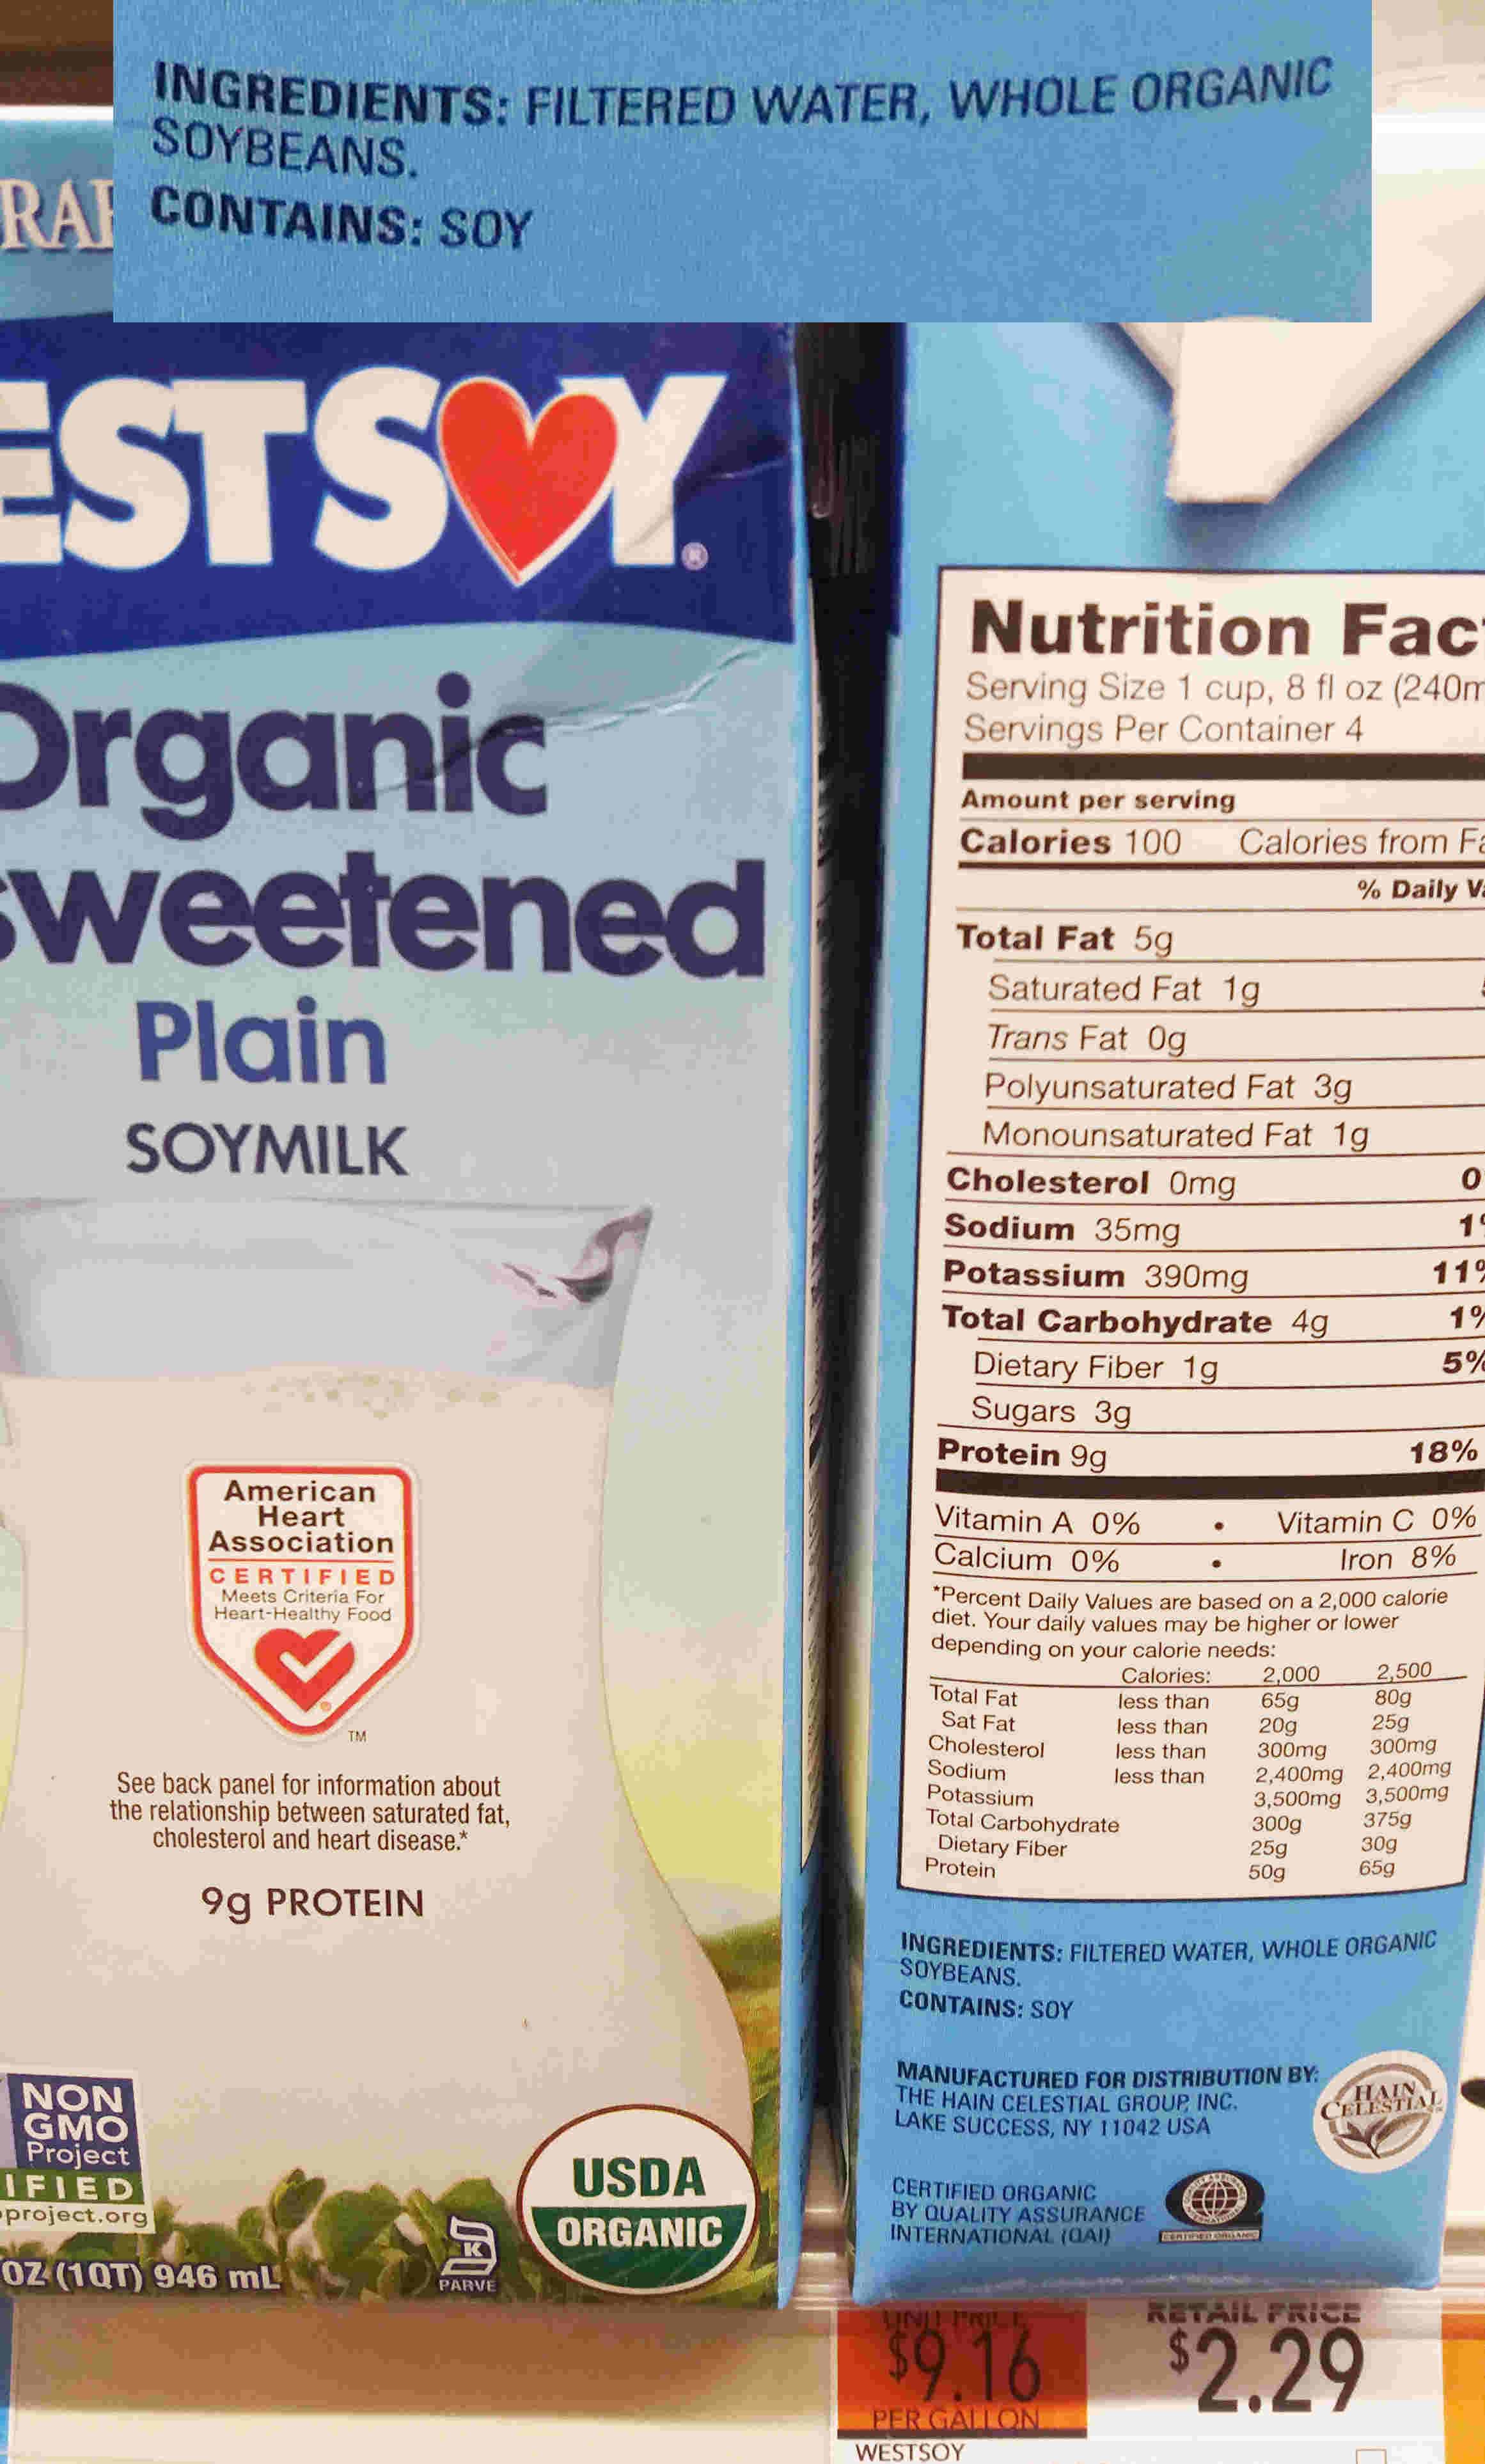 Organic soy milk